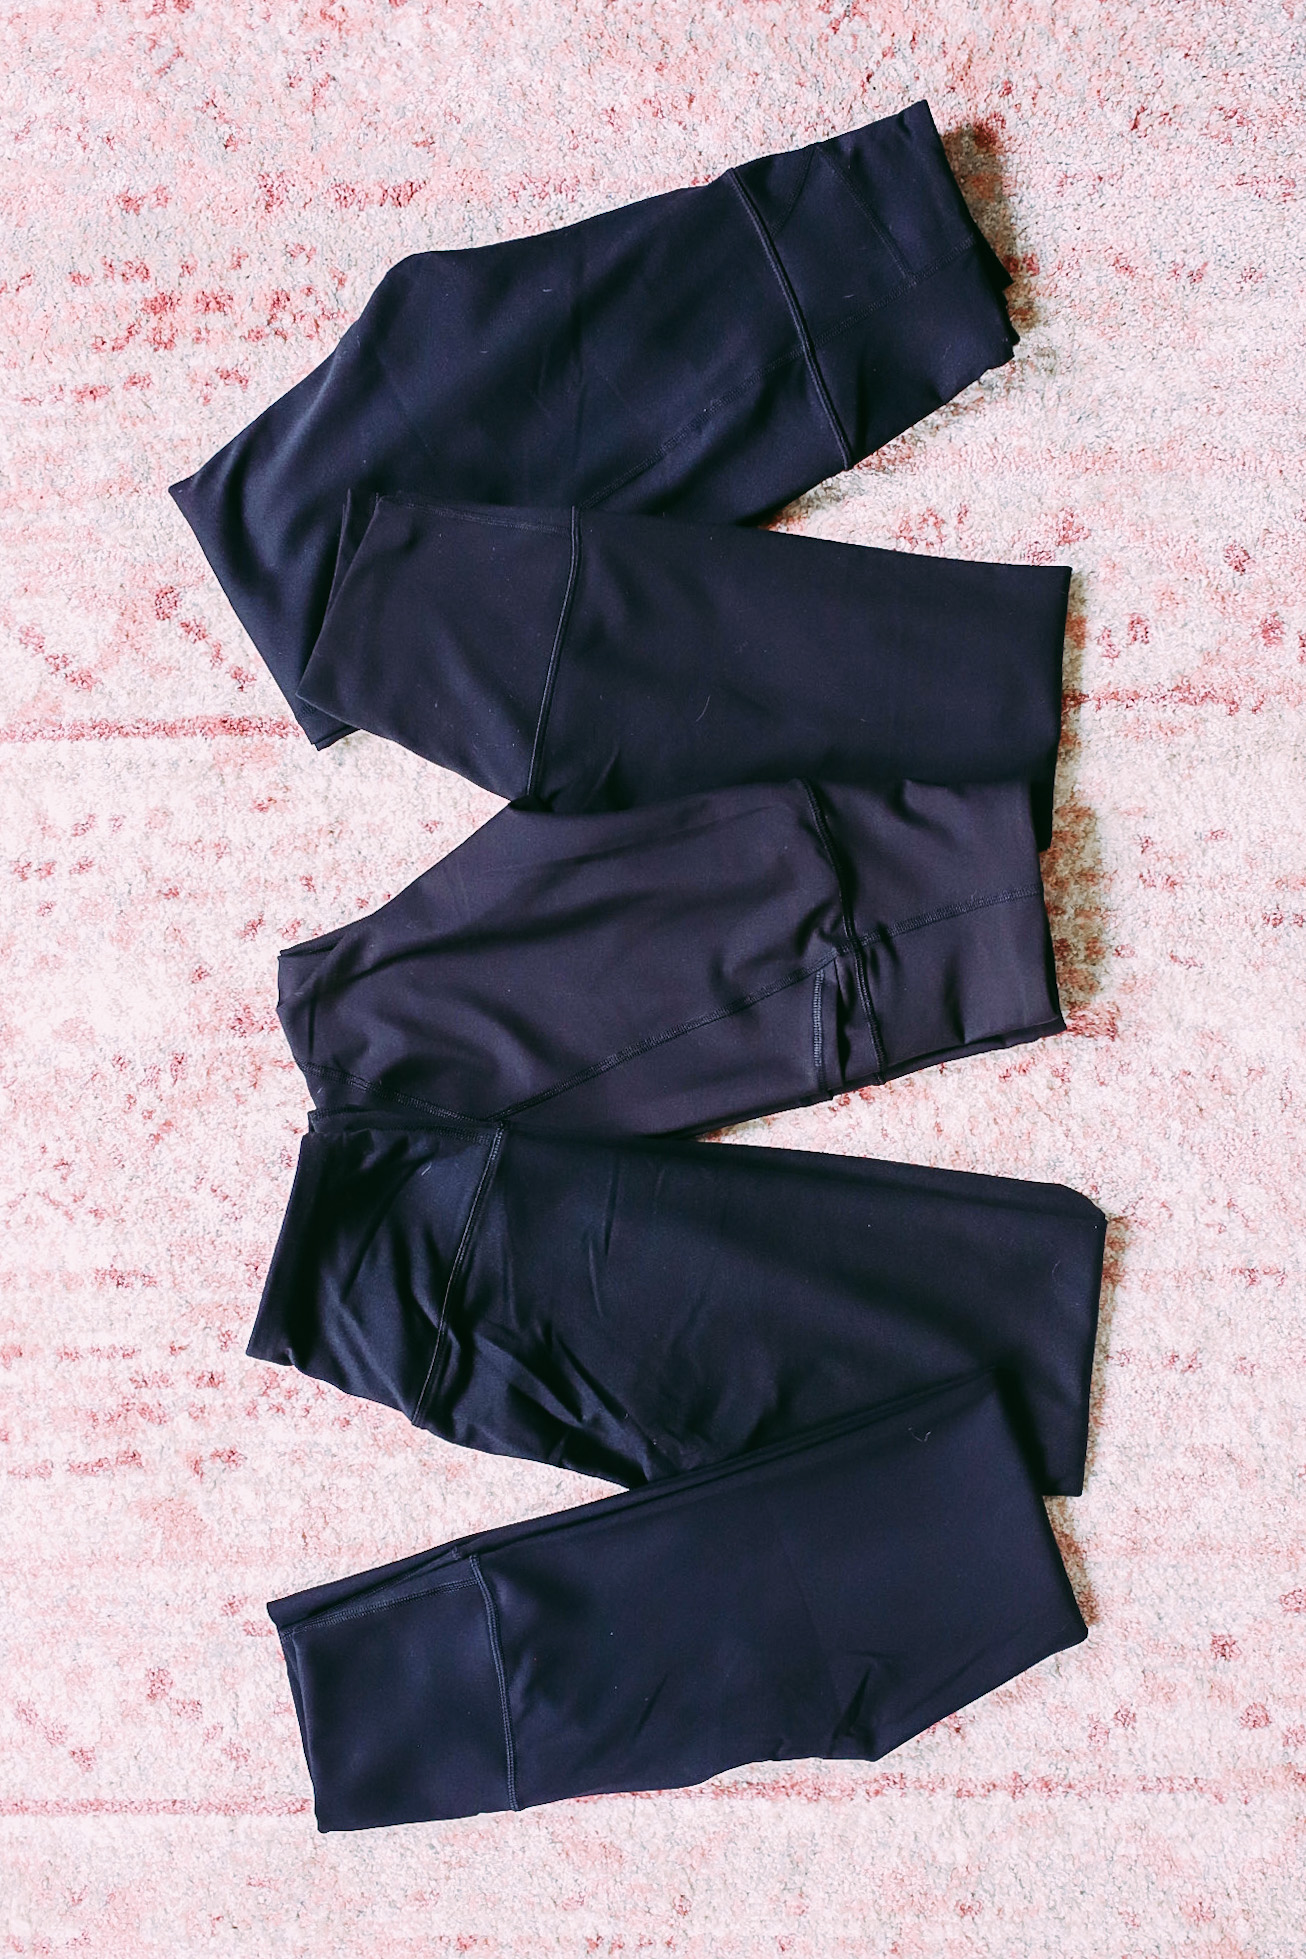 90 DEGREE BY REFLEX Womens Side Lace Capri Leggings Size Large Black  Flattering!